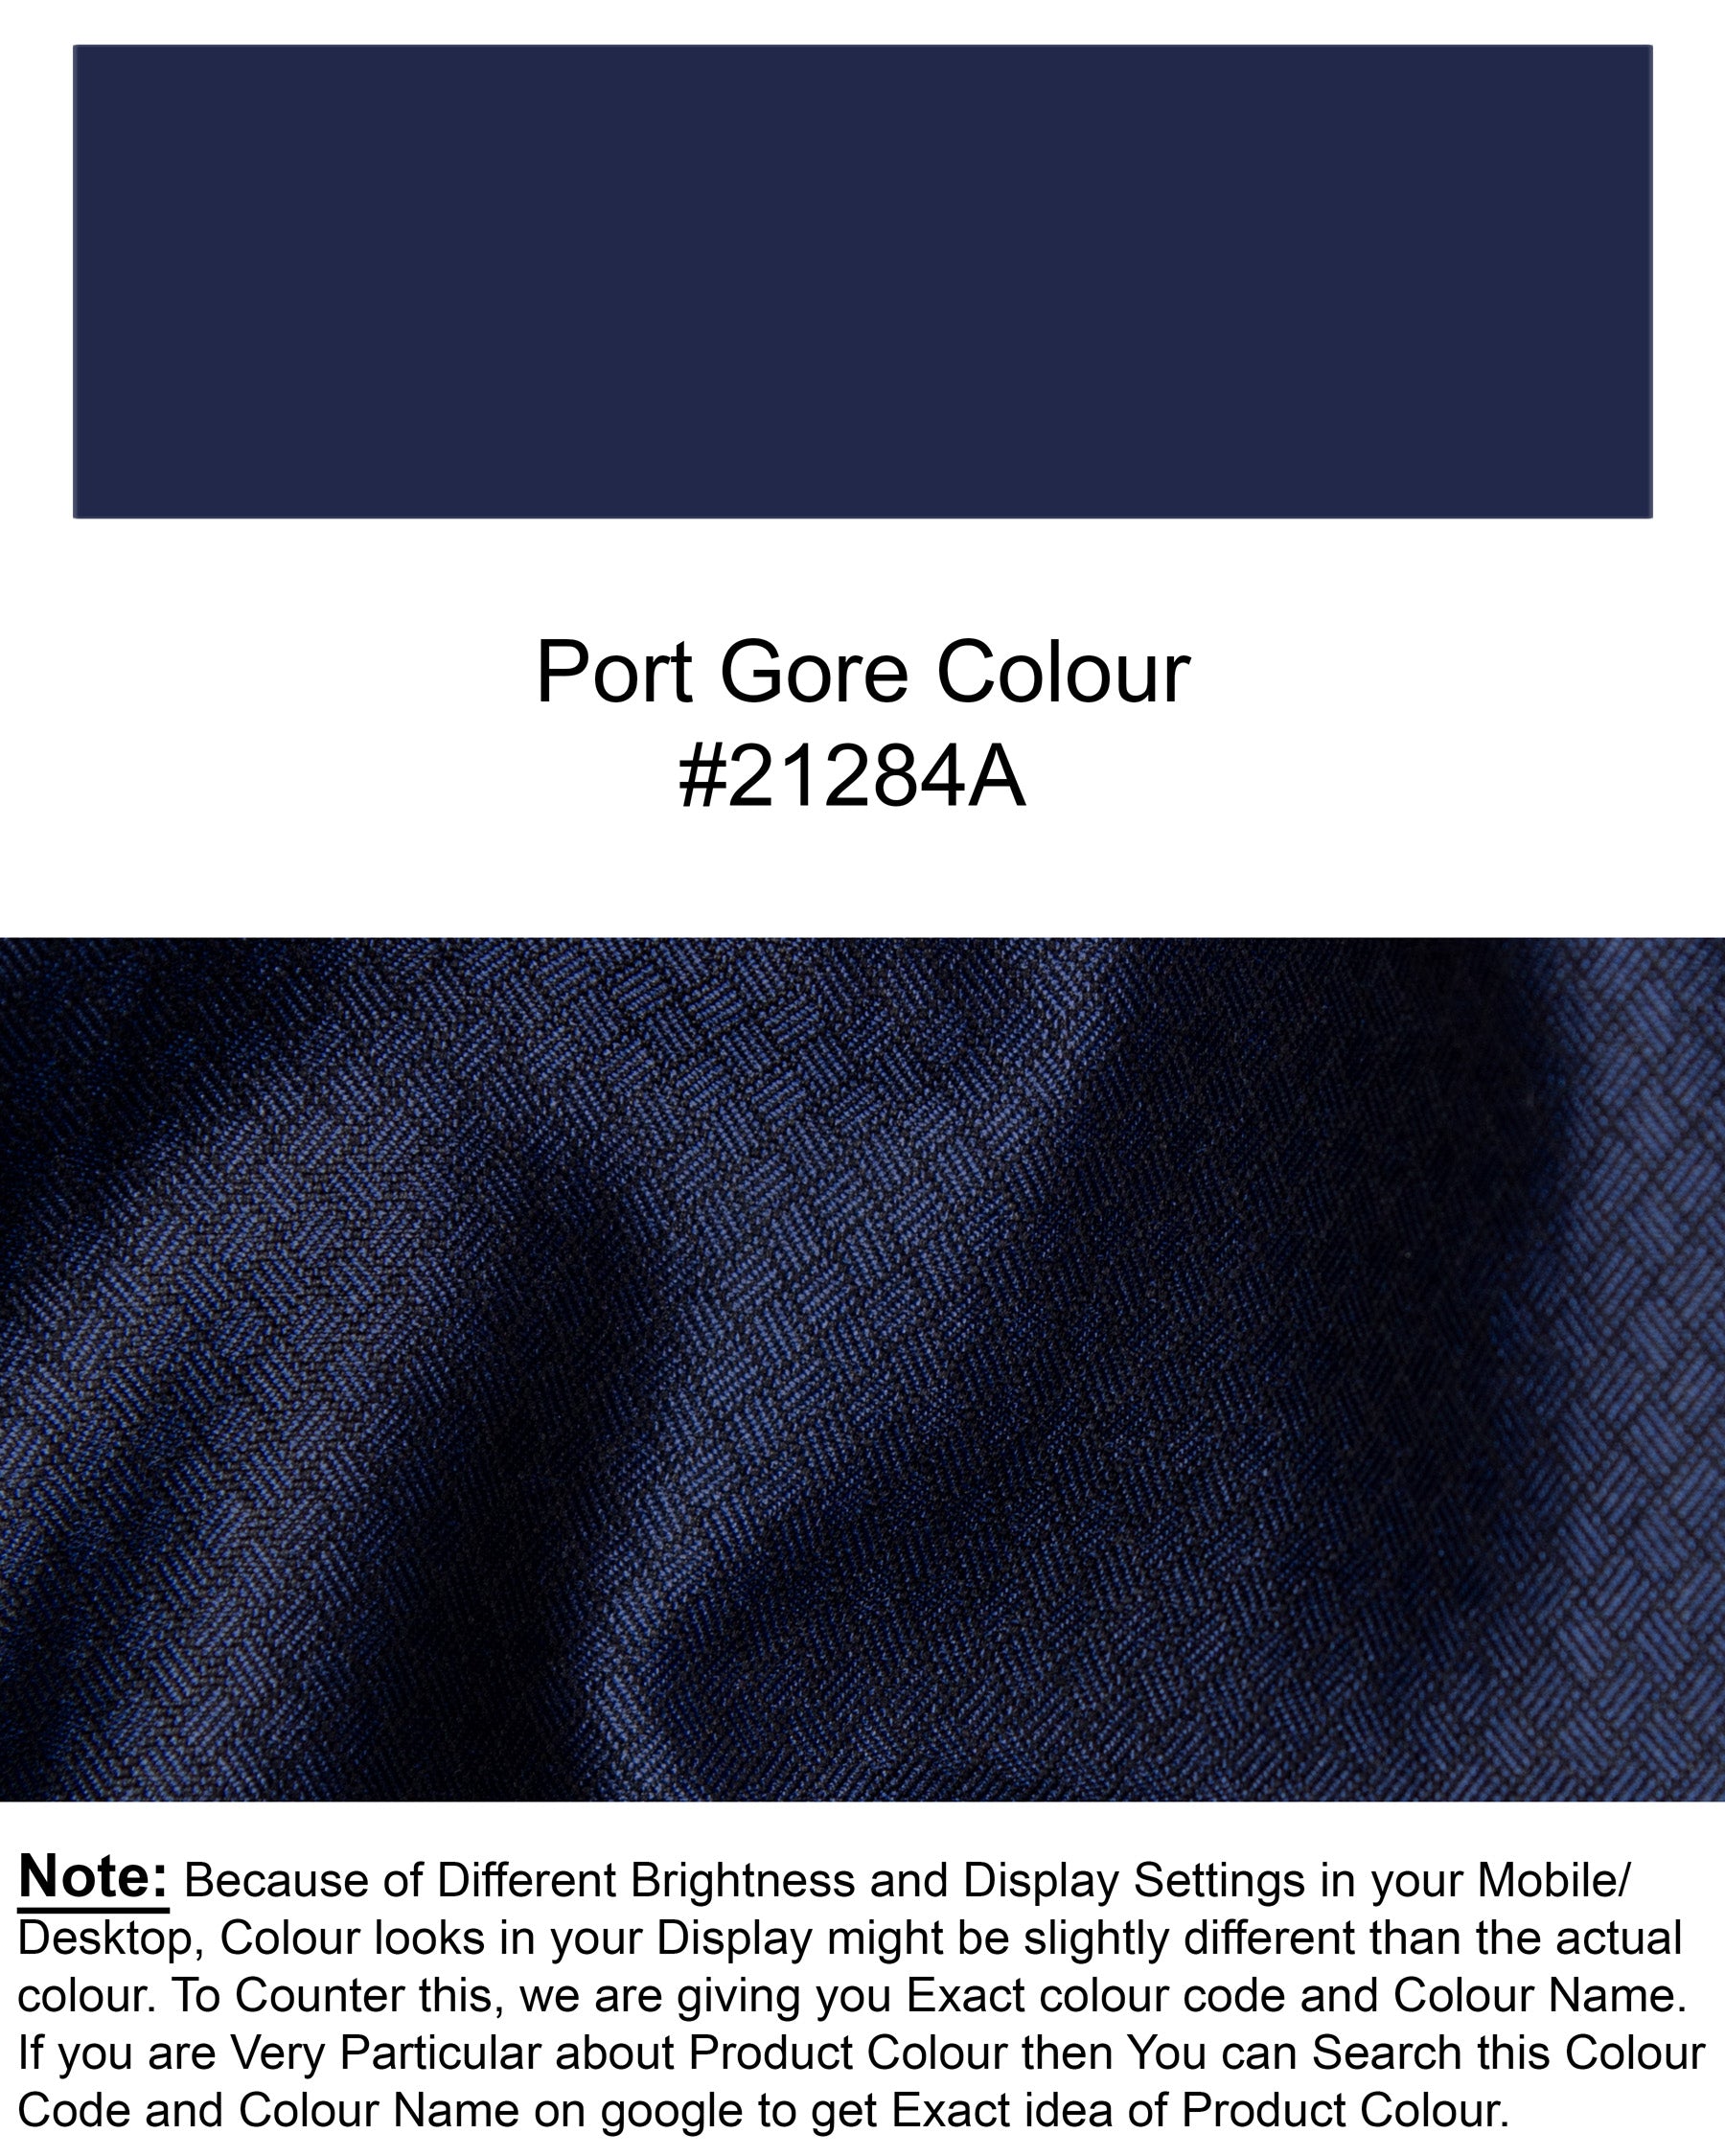 Port Gore STue Subtle Textured Woolrich Tuxedo Suit ST1273-BKL-48, ST1273-BKL-56, ST1273-BKL-36, ST1273-BKL-38, ST1273-BKL-40, ST1273-BKL-42, ST1273-BKL-44, ST1273-BKL-46, ST1273-BKL-50, ST1273-BKL-52, ST1273-BKL-54, ST1273-BKL-58, ST1273-BKL-60